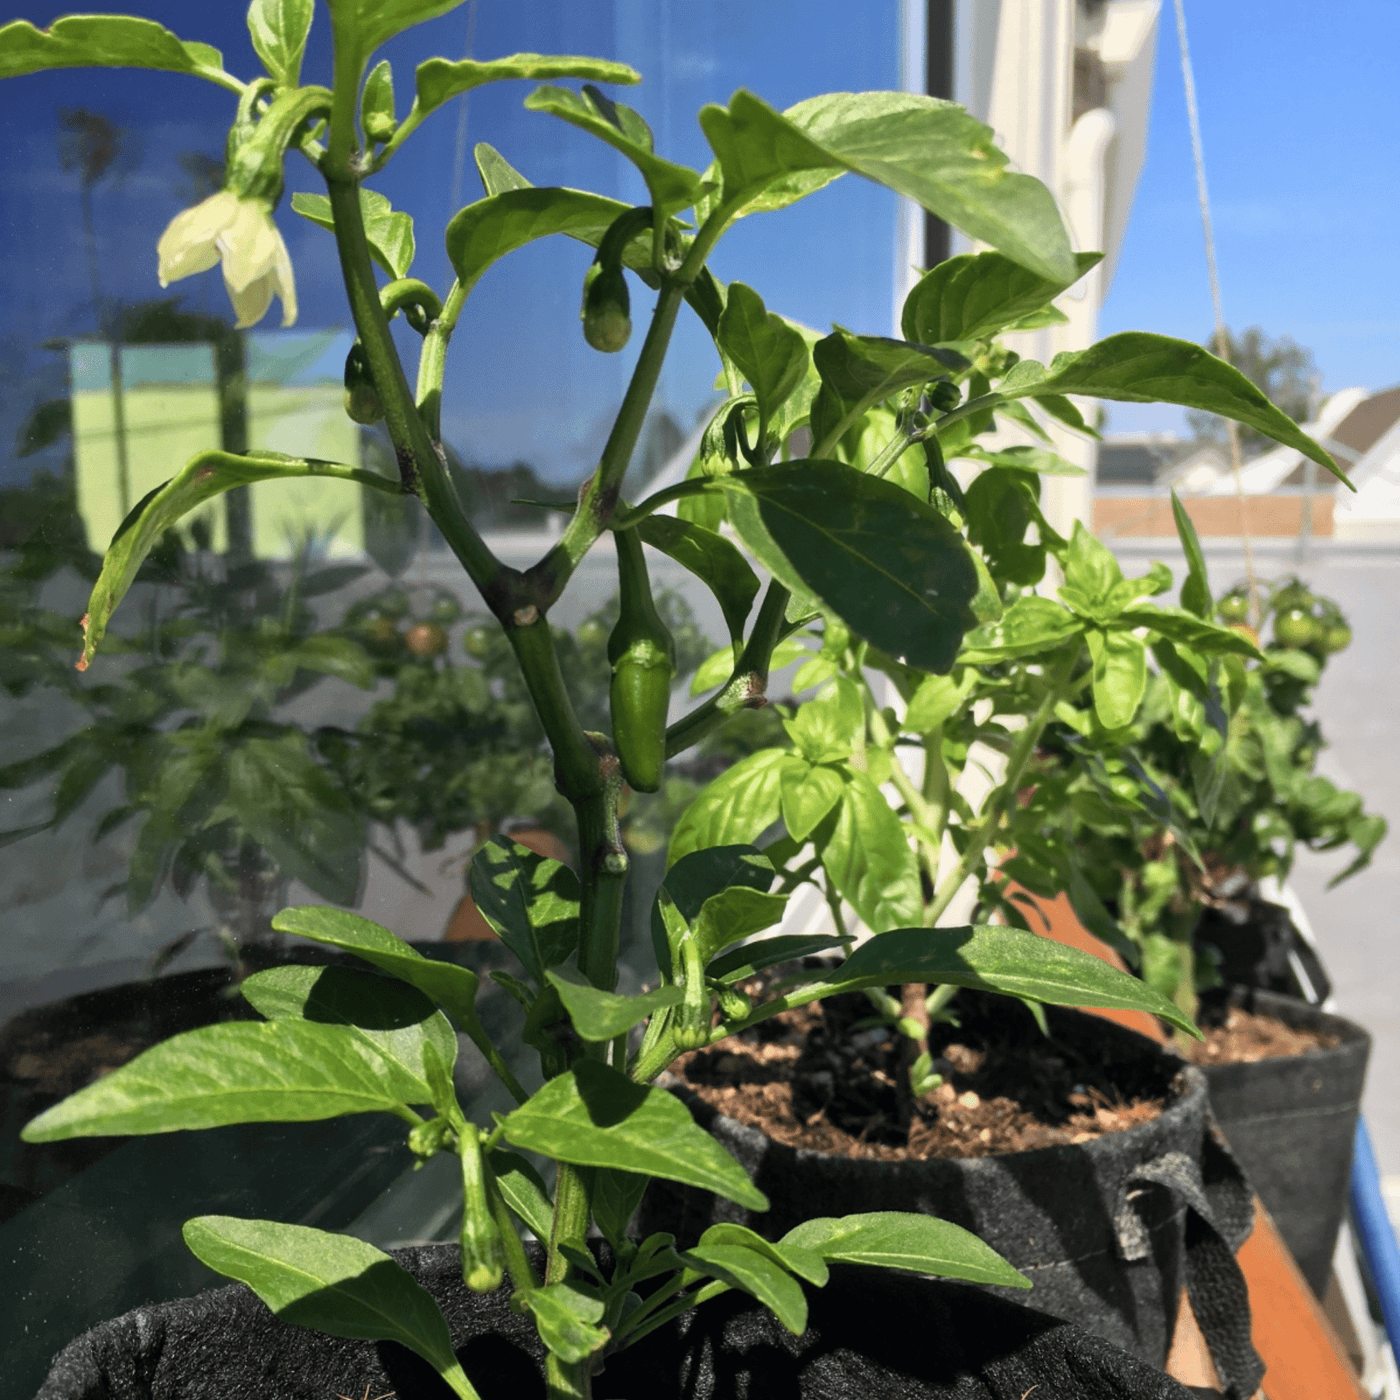 Jalapeno Pepper Grow Kit